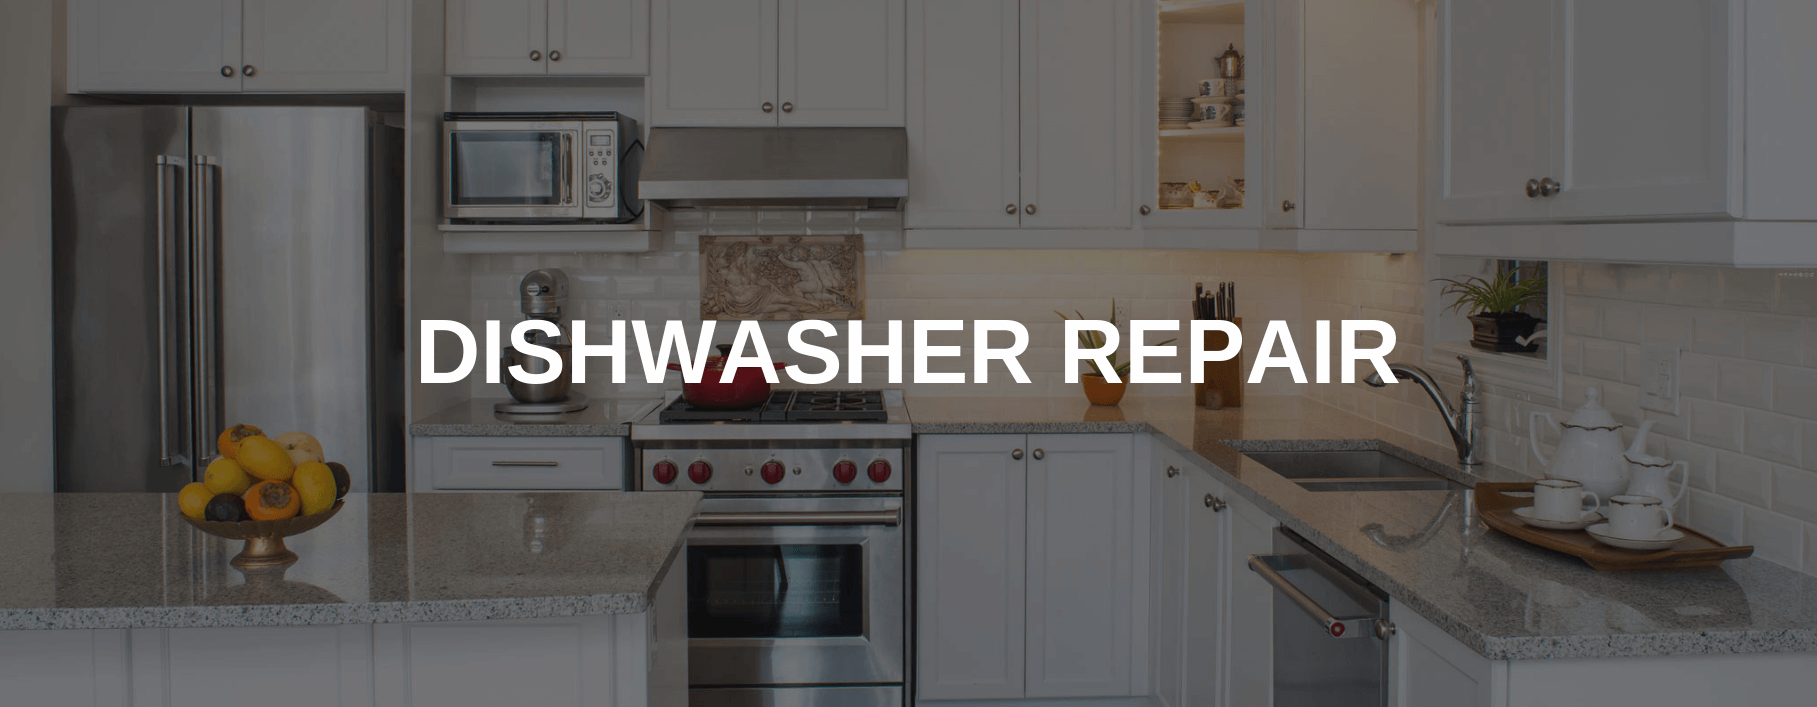 dishwasher repair gaithersburg